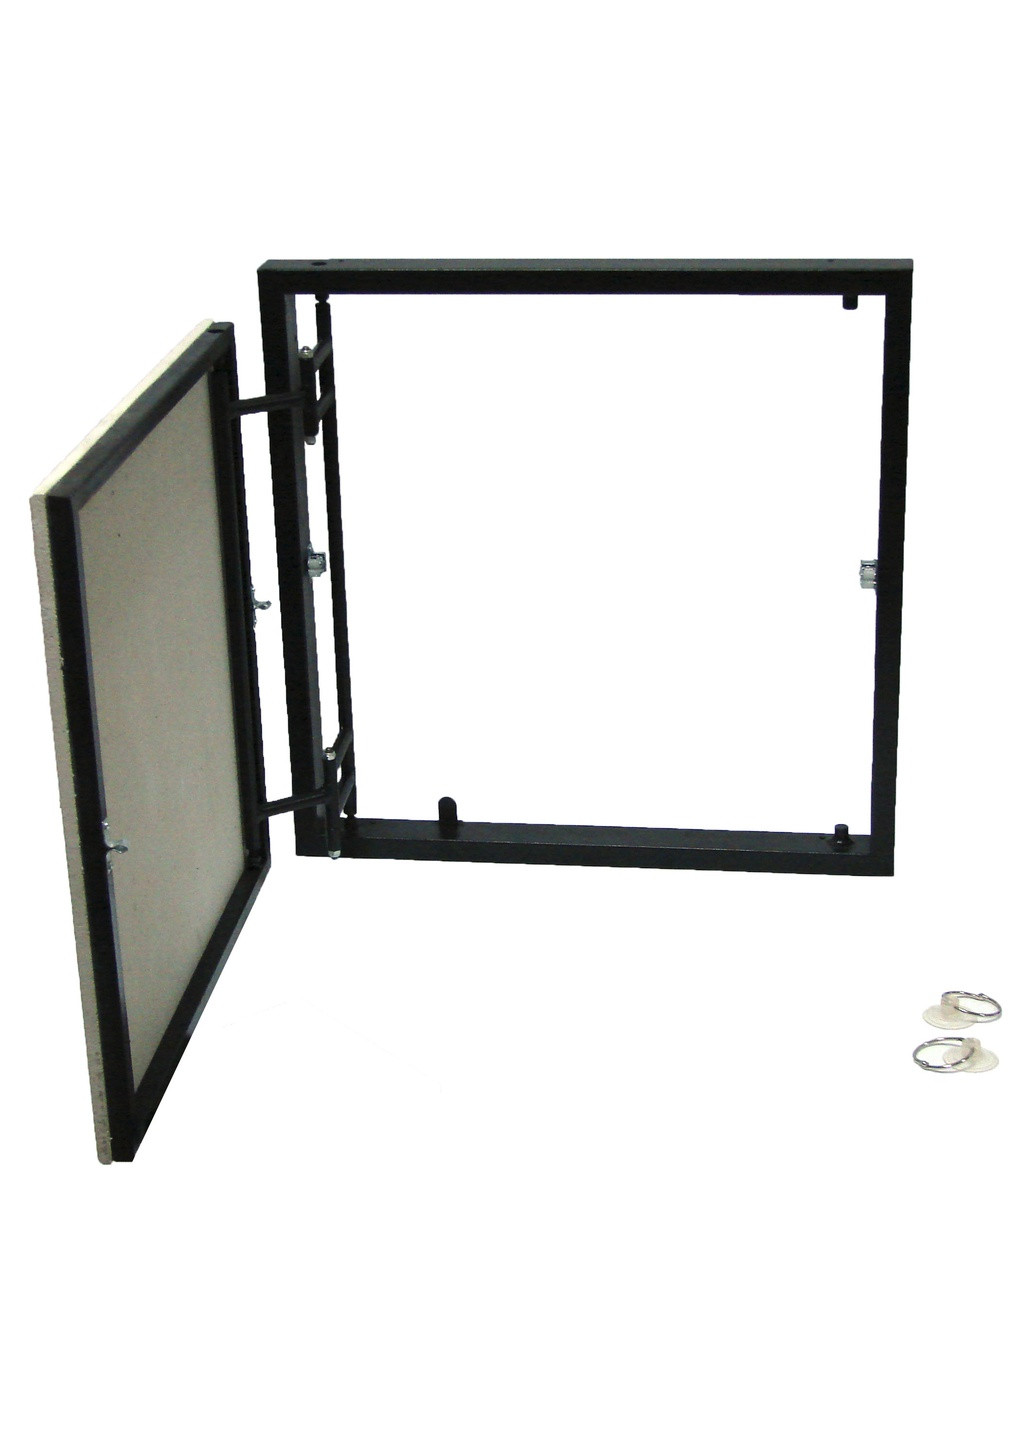 Ревизионный люк скрытого монтажа под плитку фронтальнораспашного типа 600x600 ревизионная дверца для плитки (1207) S-Dom (264208761)